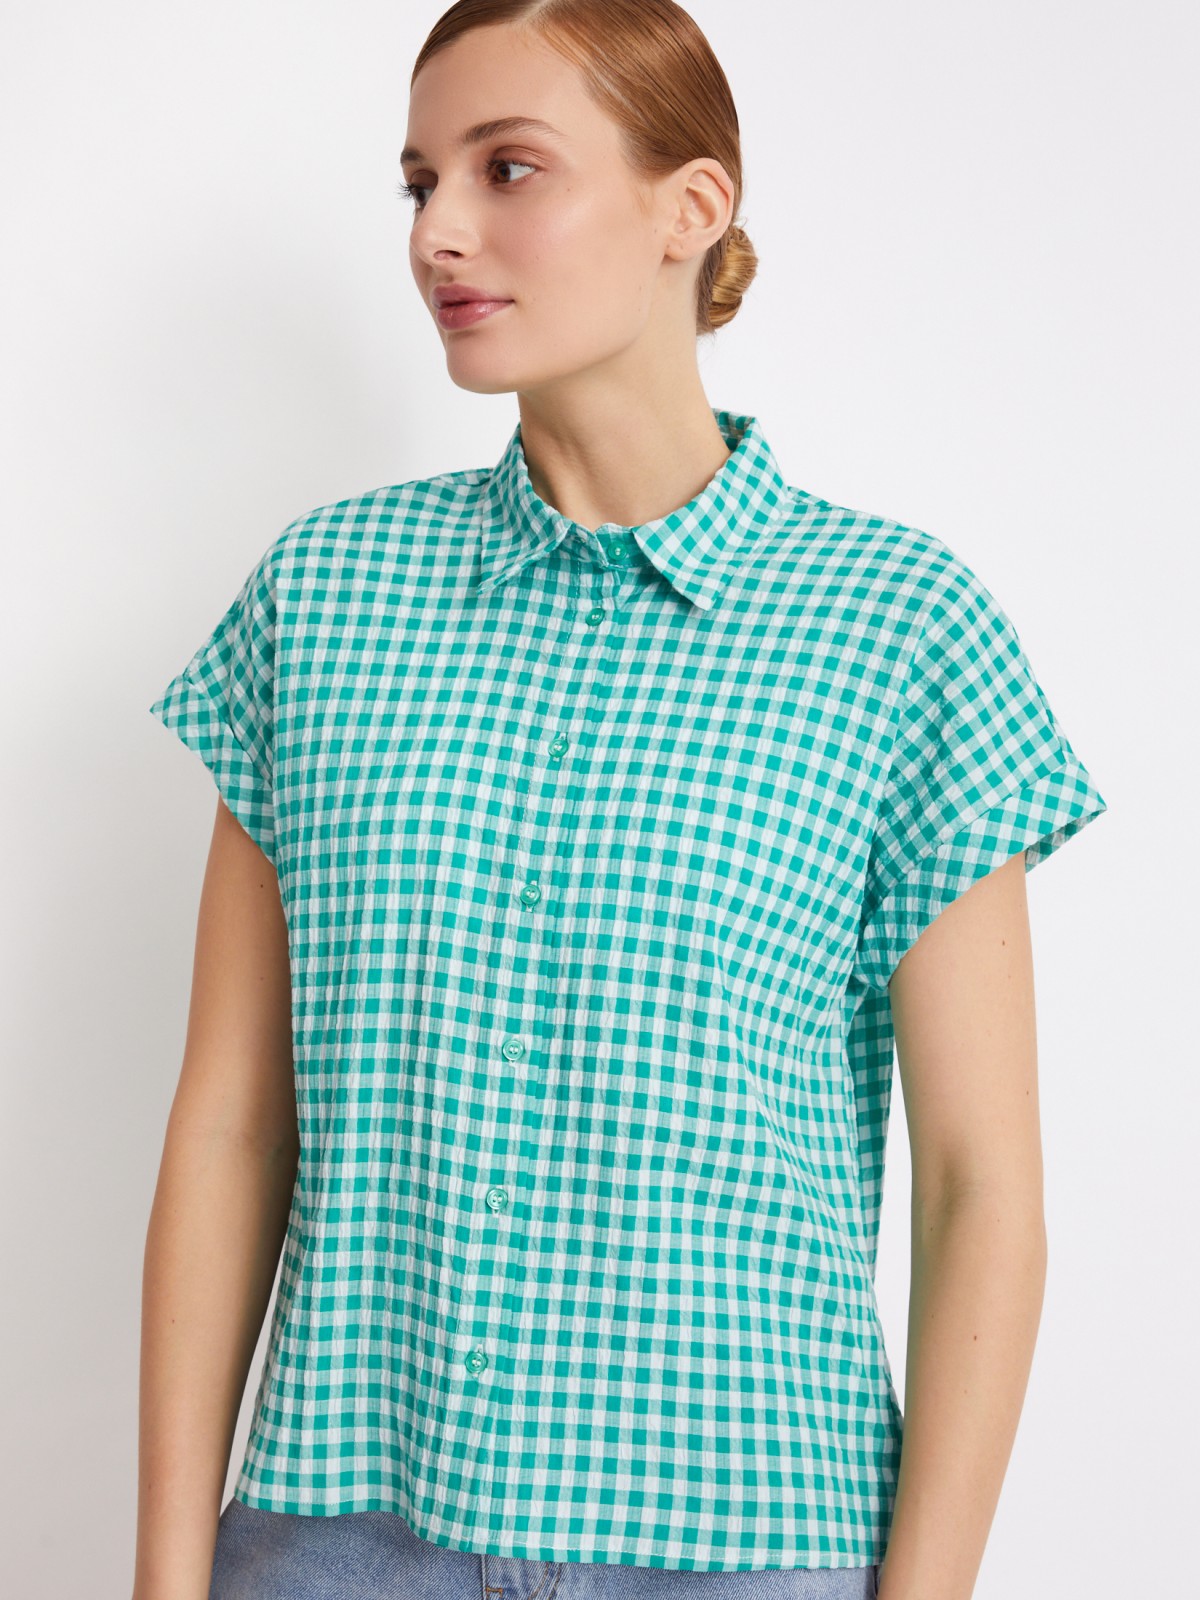 Блузка с короткими рукавами zolla 02324128Y031, цвет светло-зеленый, размер XS - фото 3